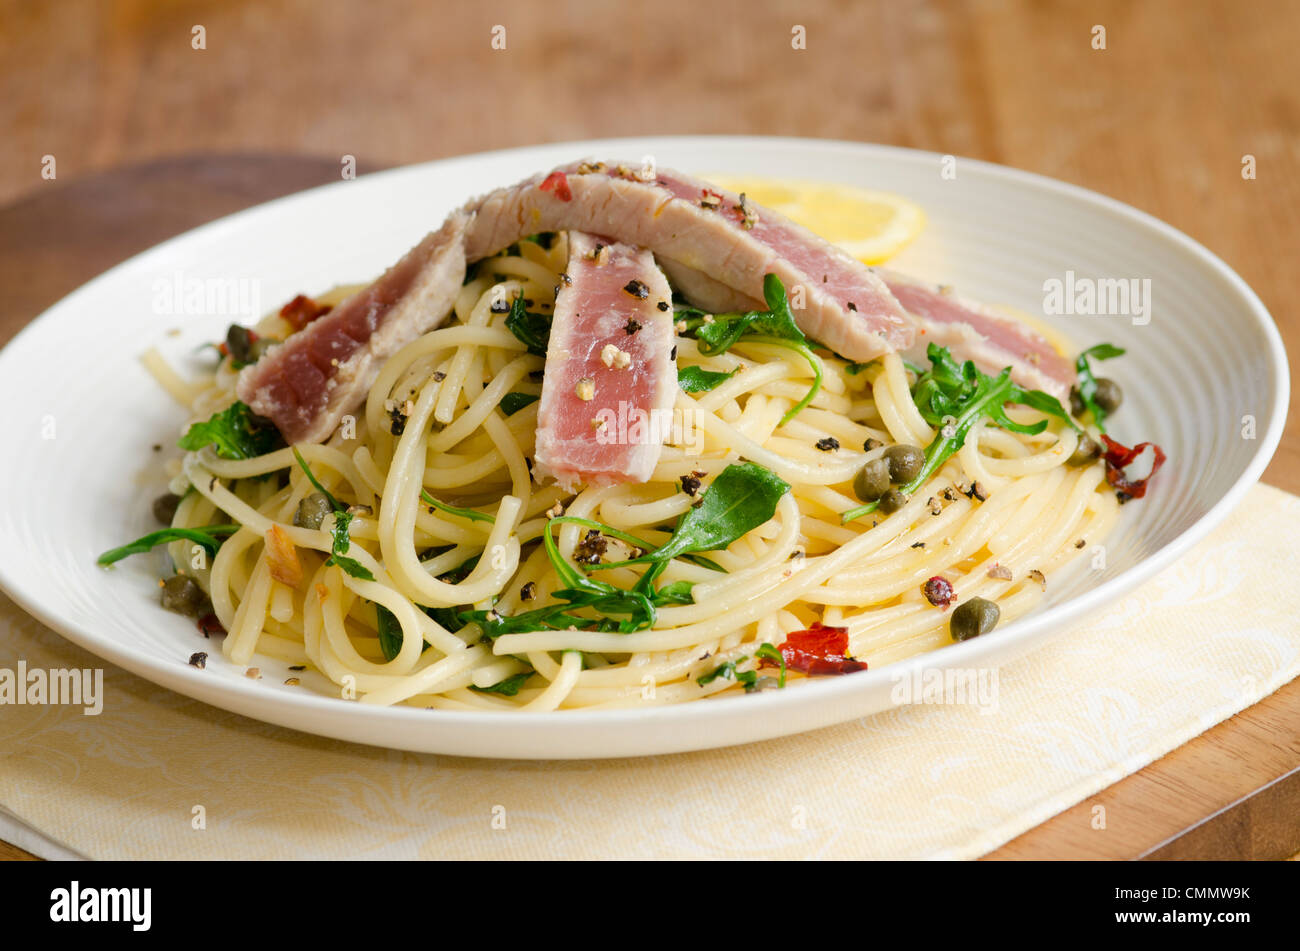 Spaghetti with tuna steak, rocket and herbs Stock Photo - Alamy